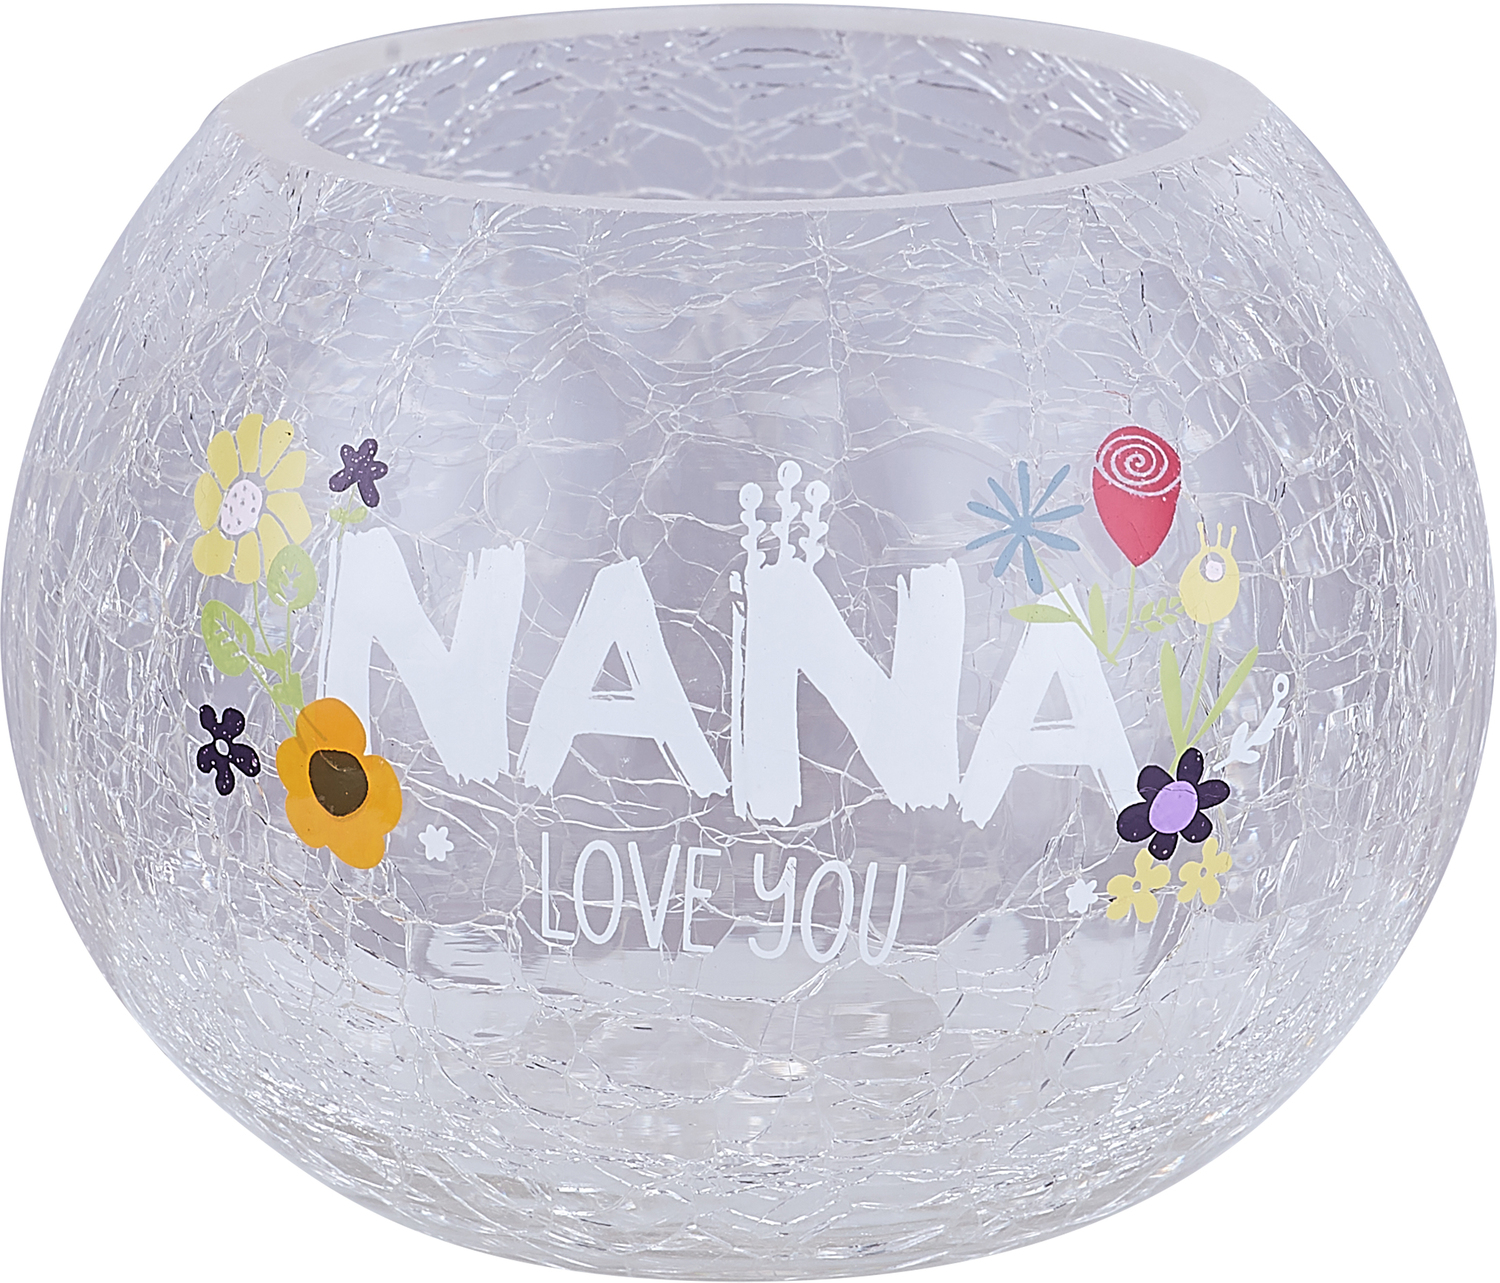 Nana by Love You More - Nana - 5" Crackled Glass Votive Holder